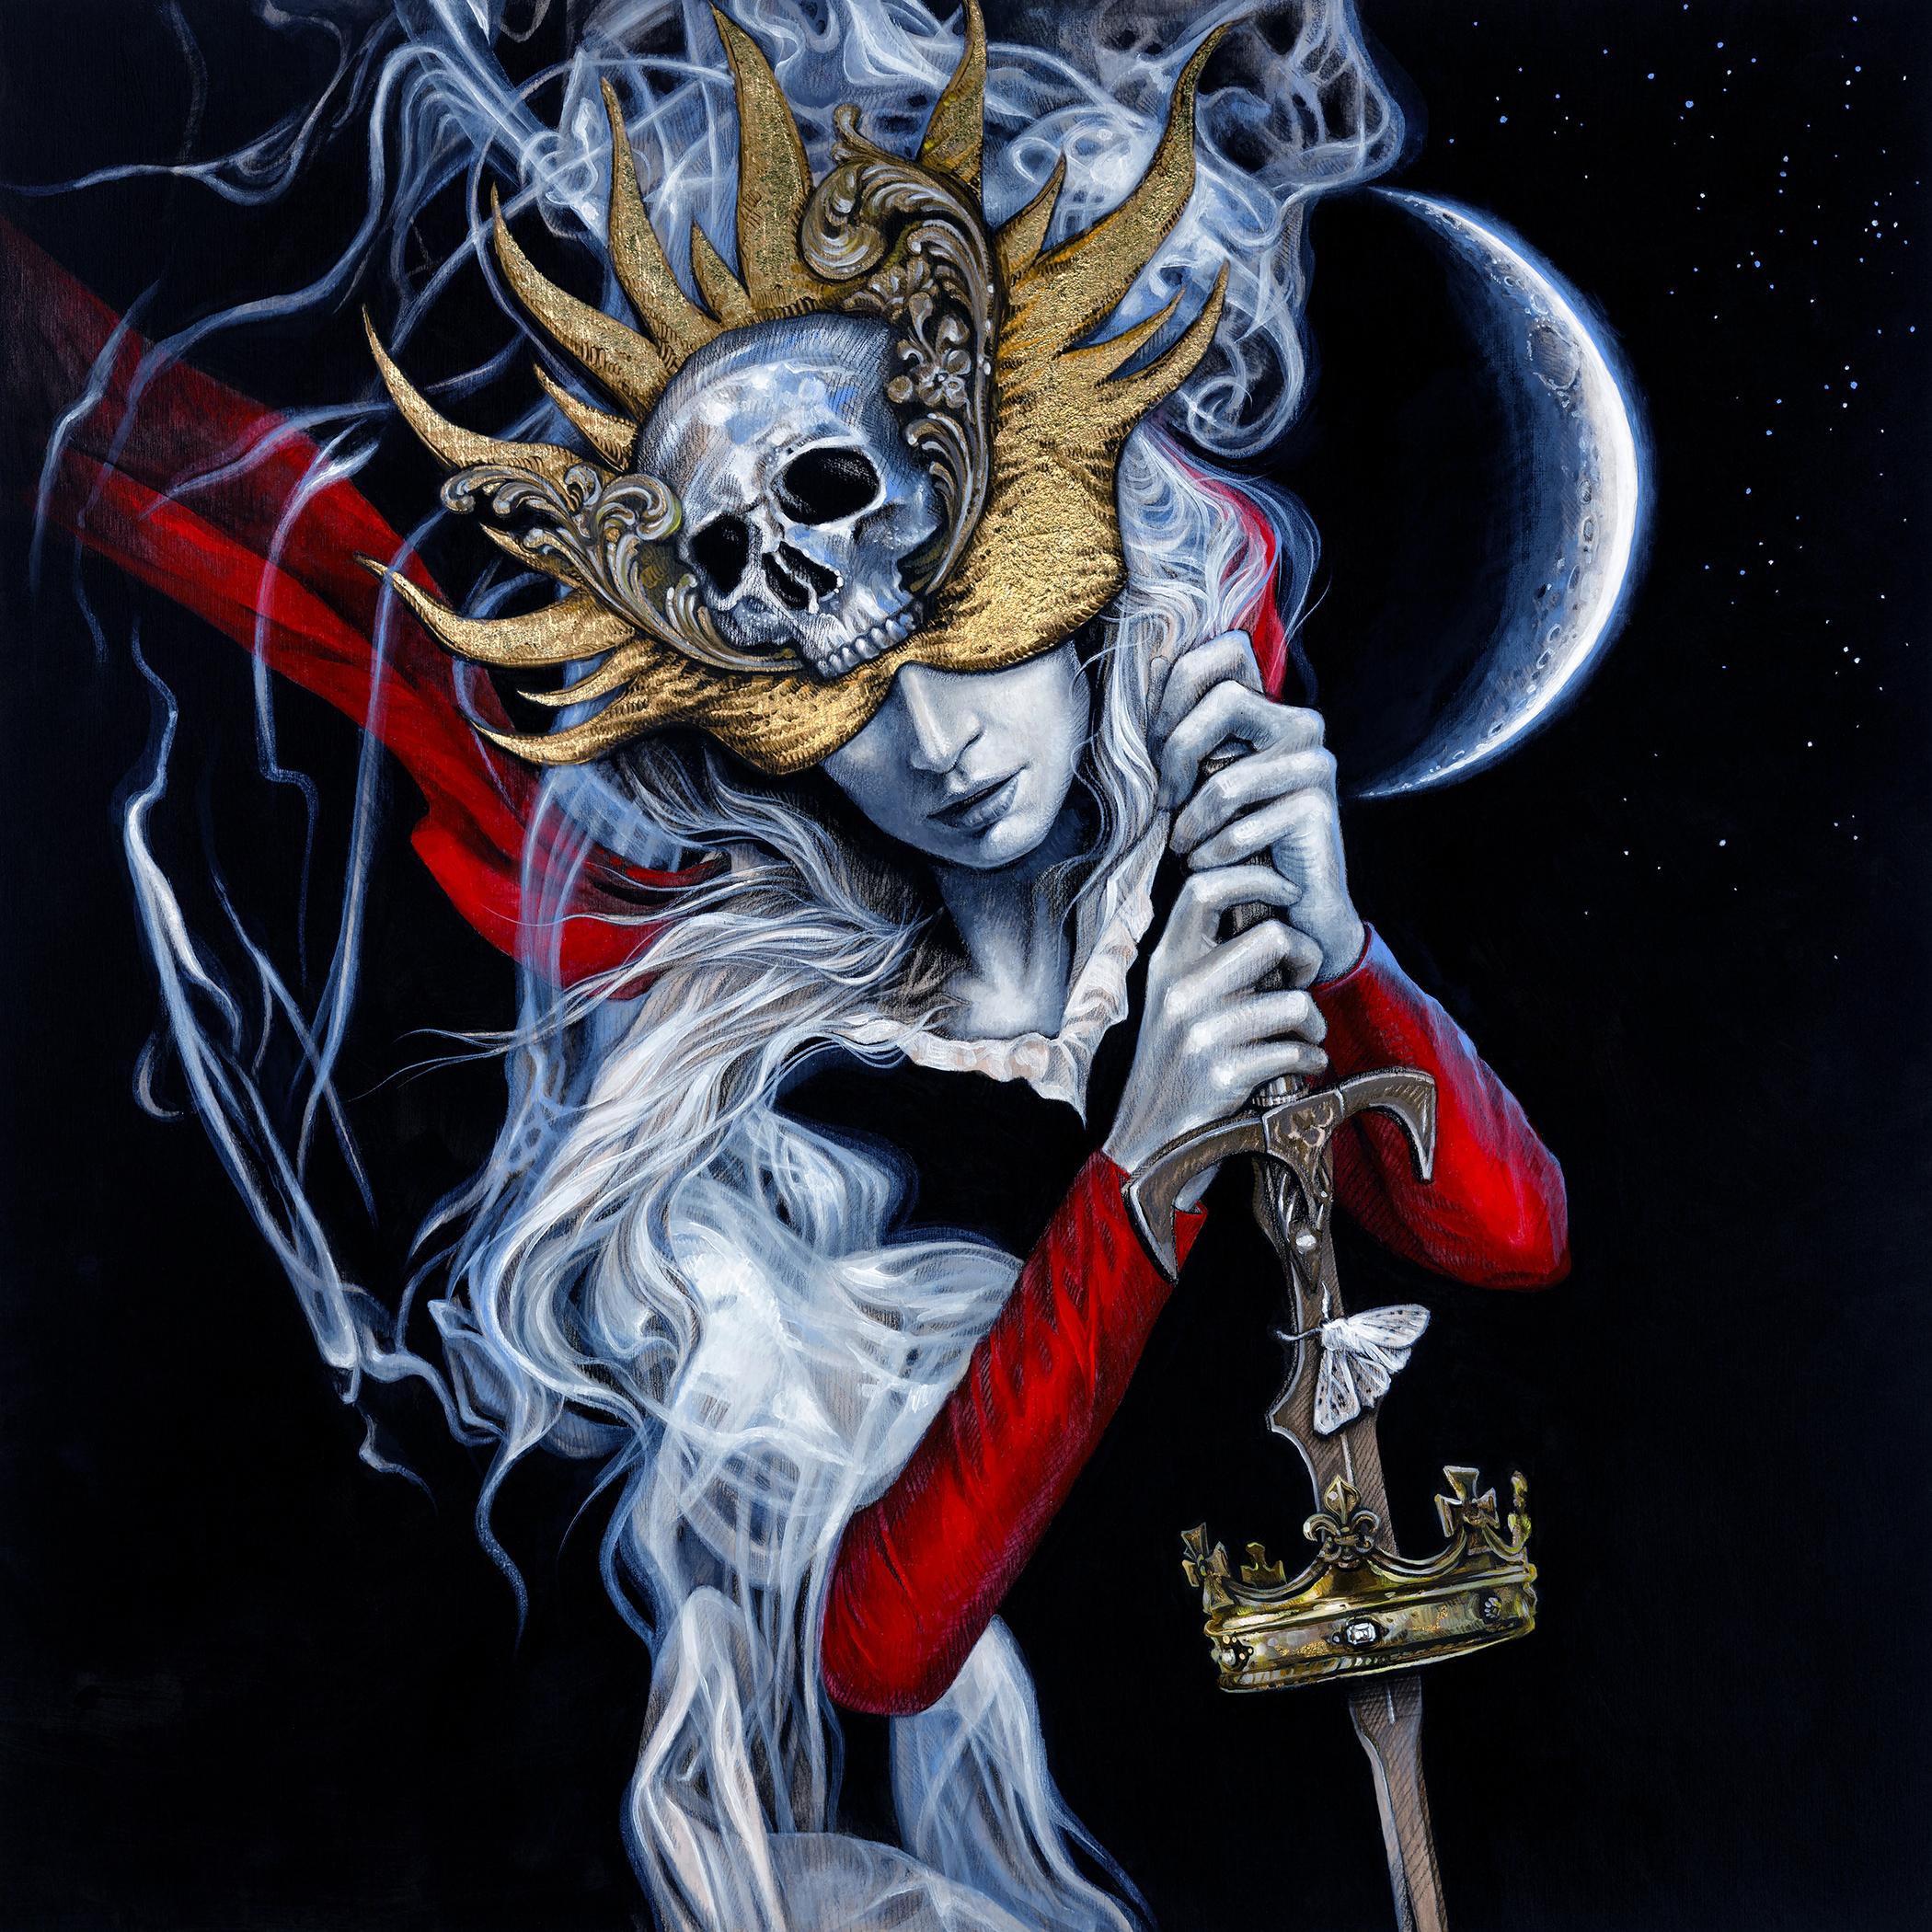 Magic Realism Figurative Artwork, "Queen of Swords" by Evgeniya Golik - Mixed Media Art by Evgeniya Golik 